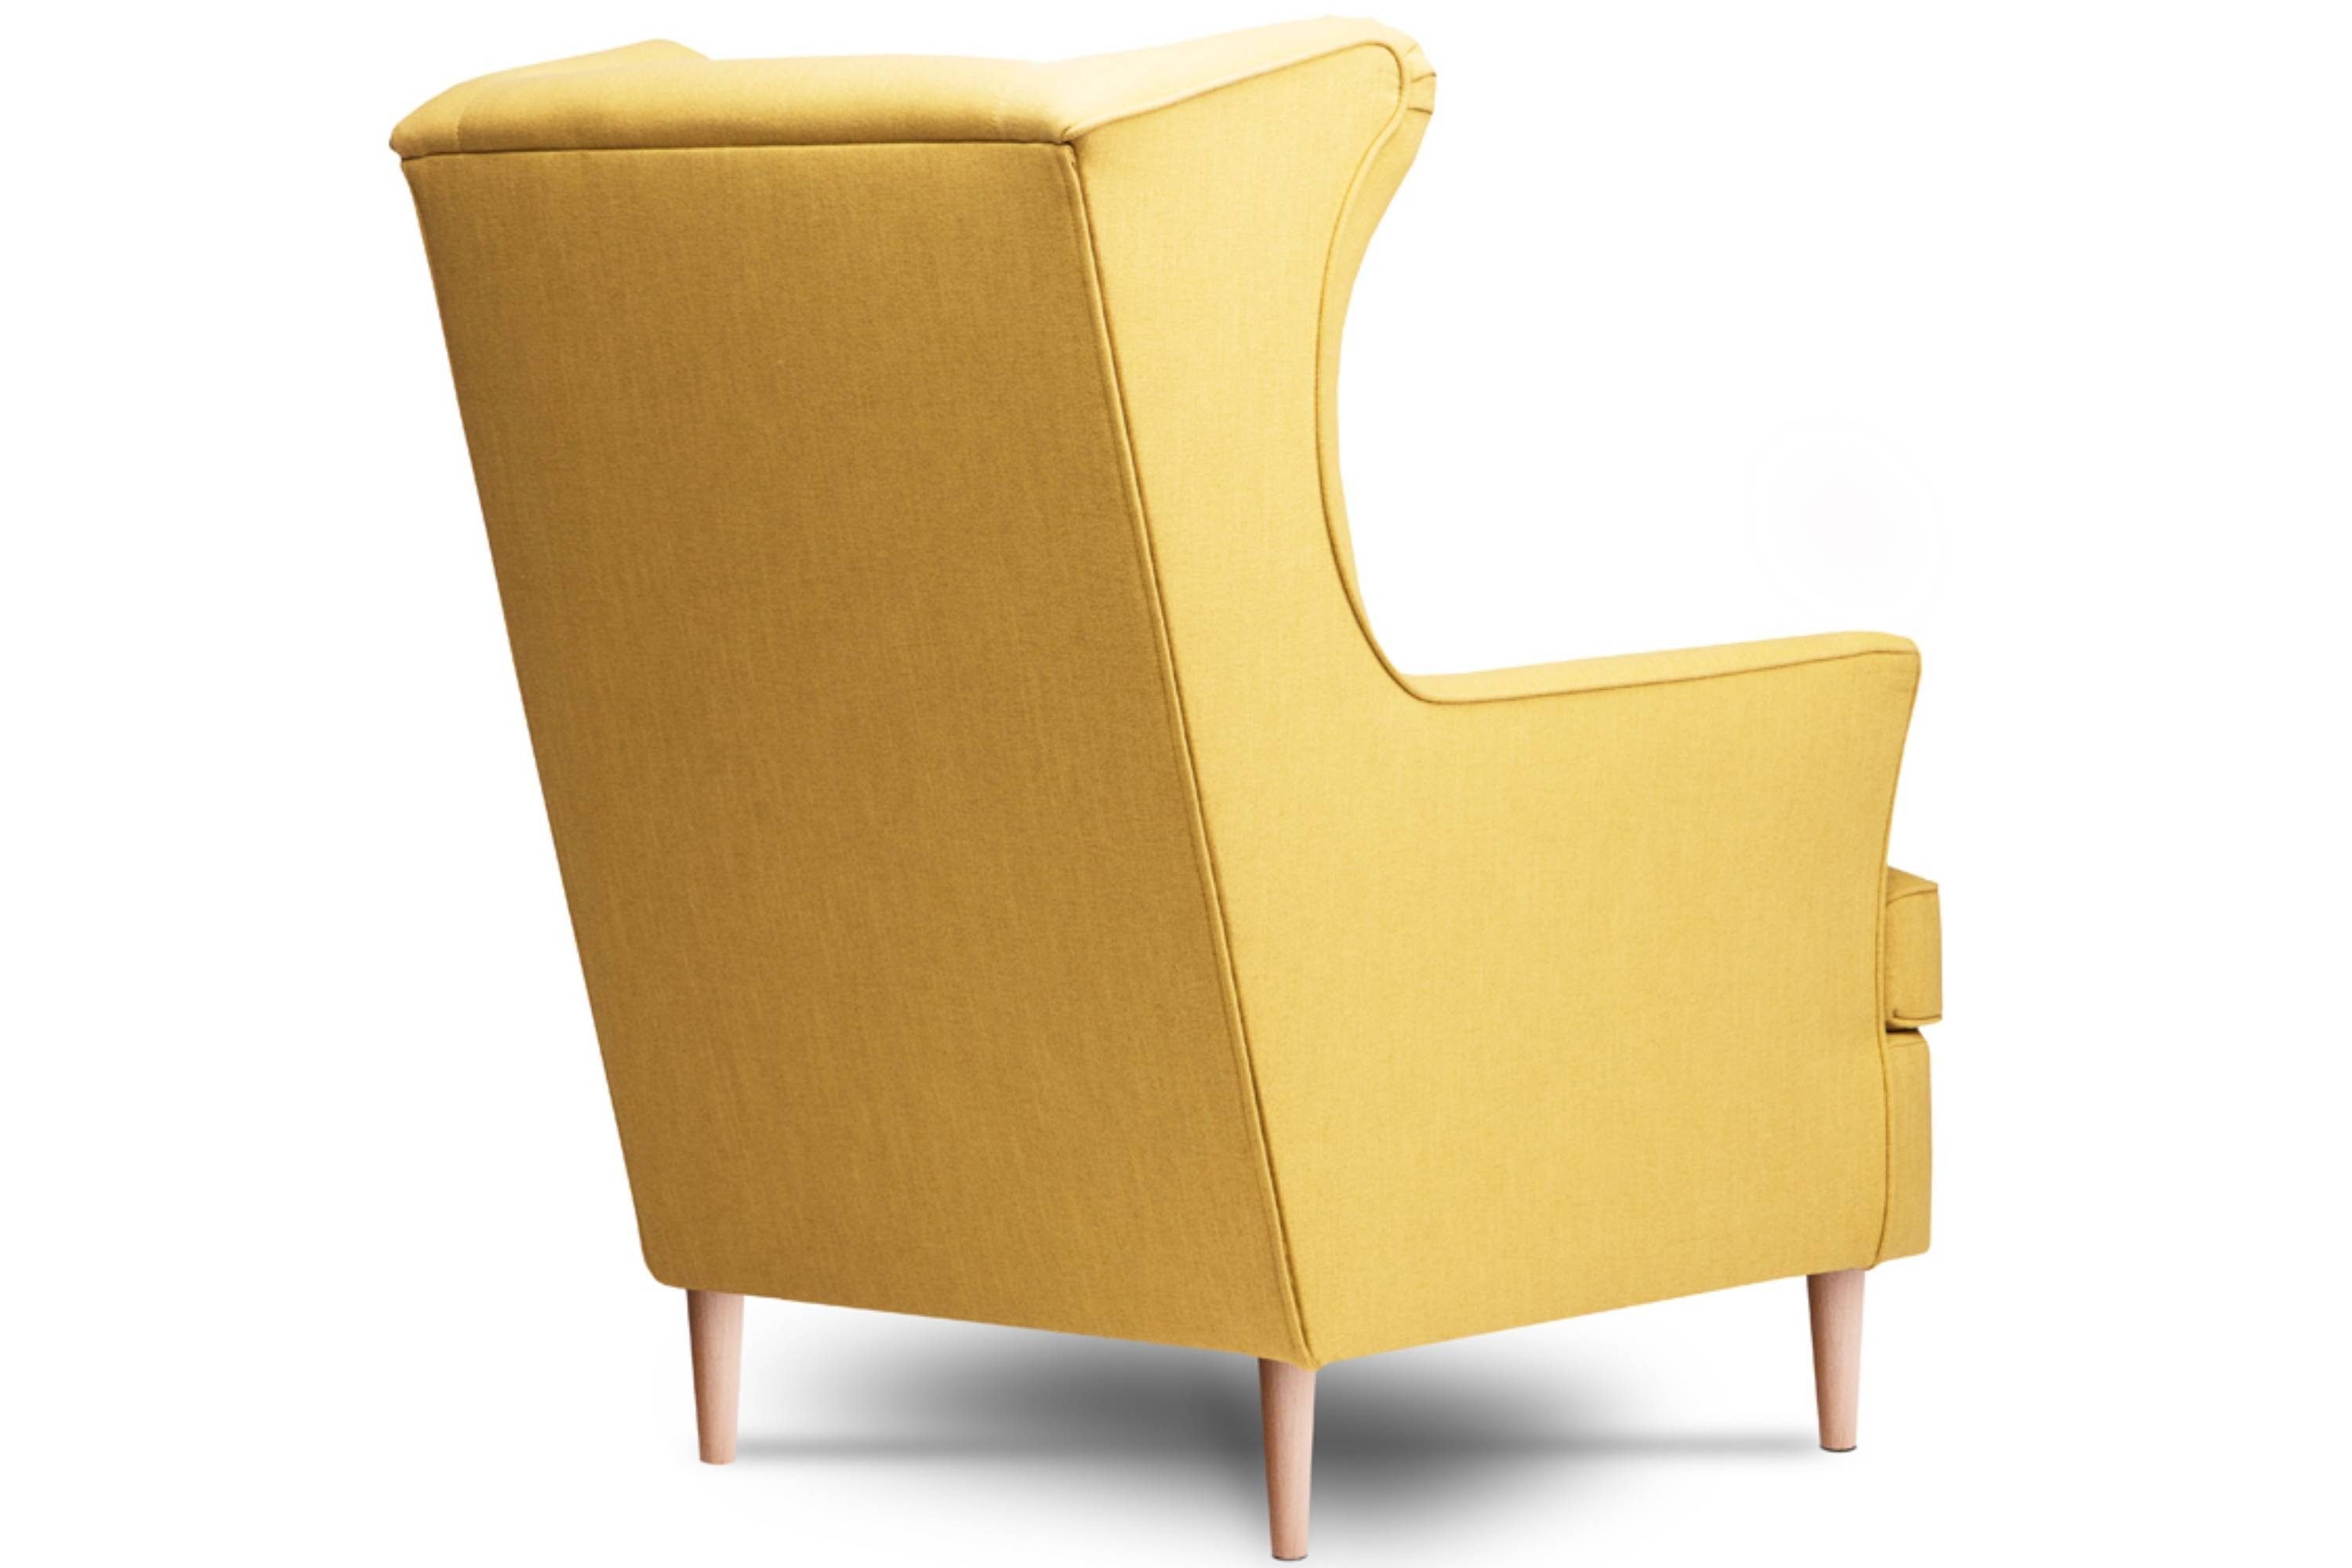 Kissen Füße, dekorativem hohe inklusive Konsimo Ohrensessel STRALIS zeitloses Design, Sessel,